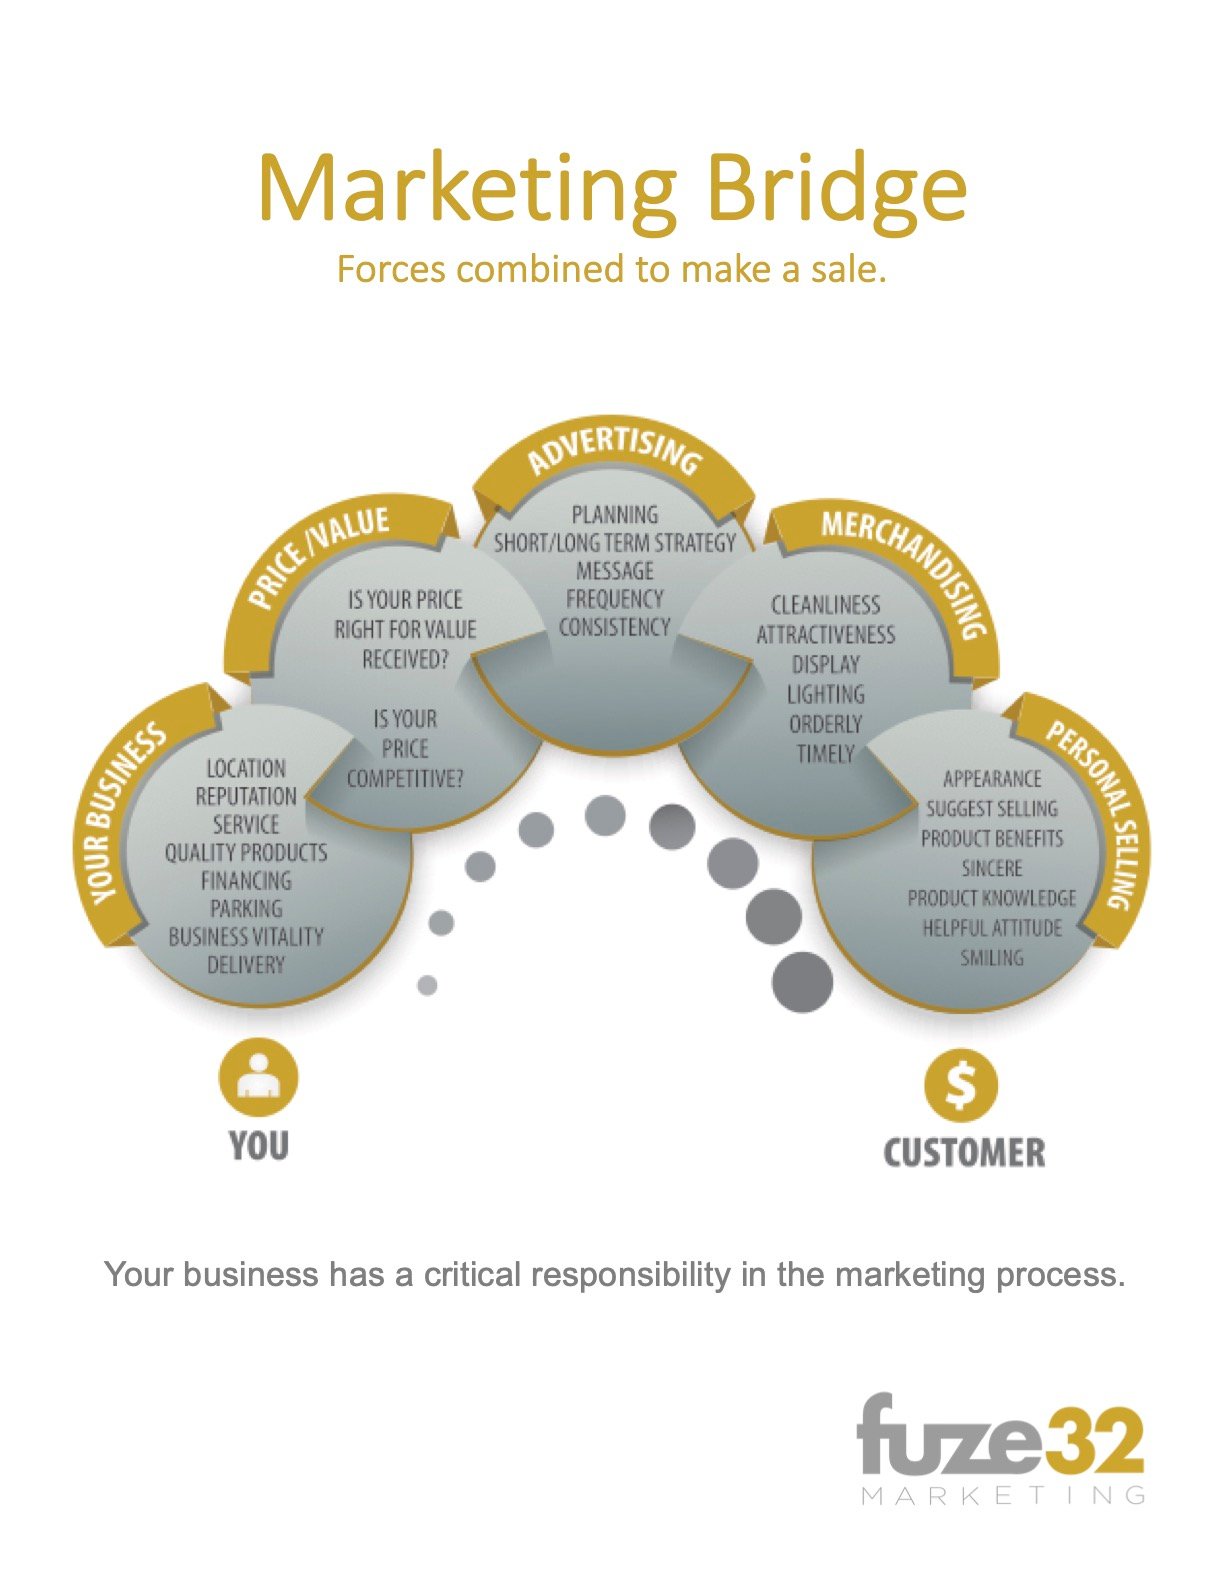 Free download - The Marketing Bridge